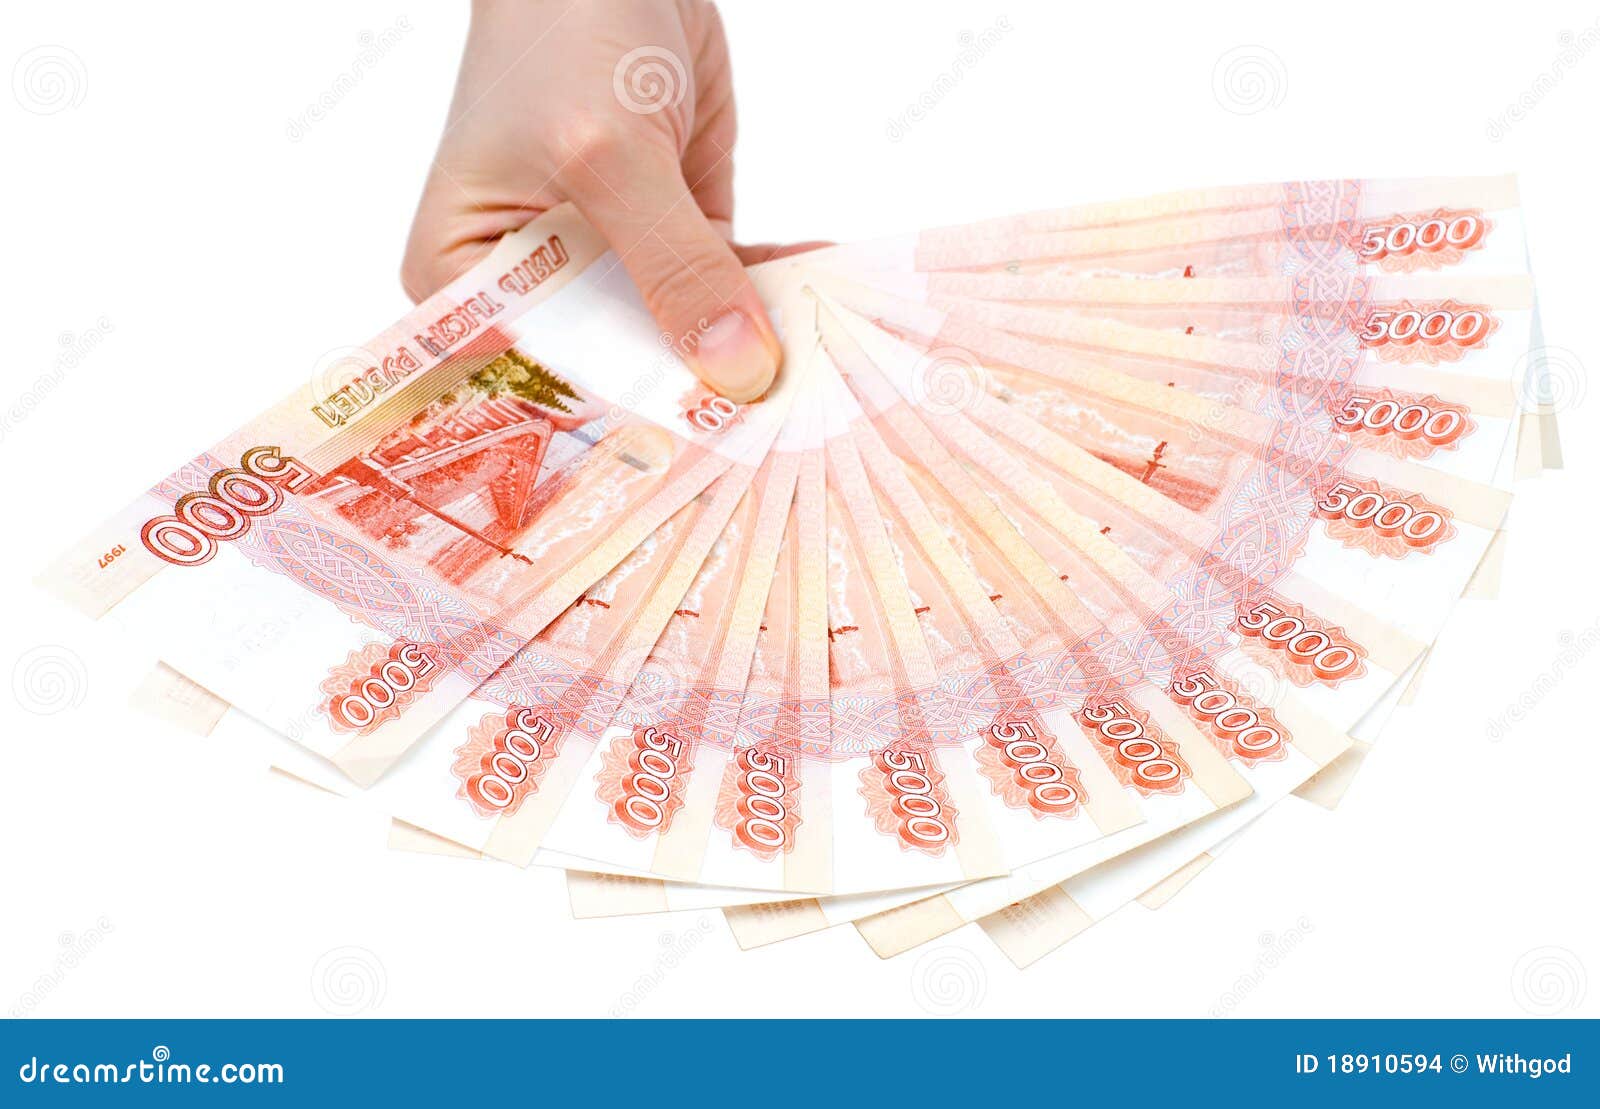 russian 5000 rouble bills